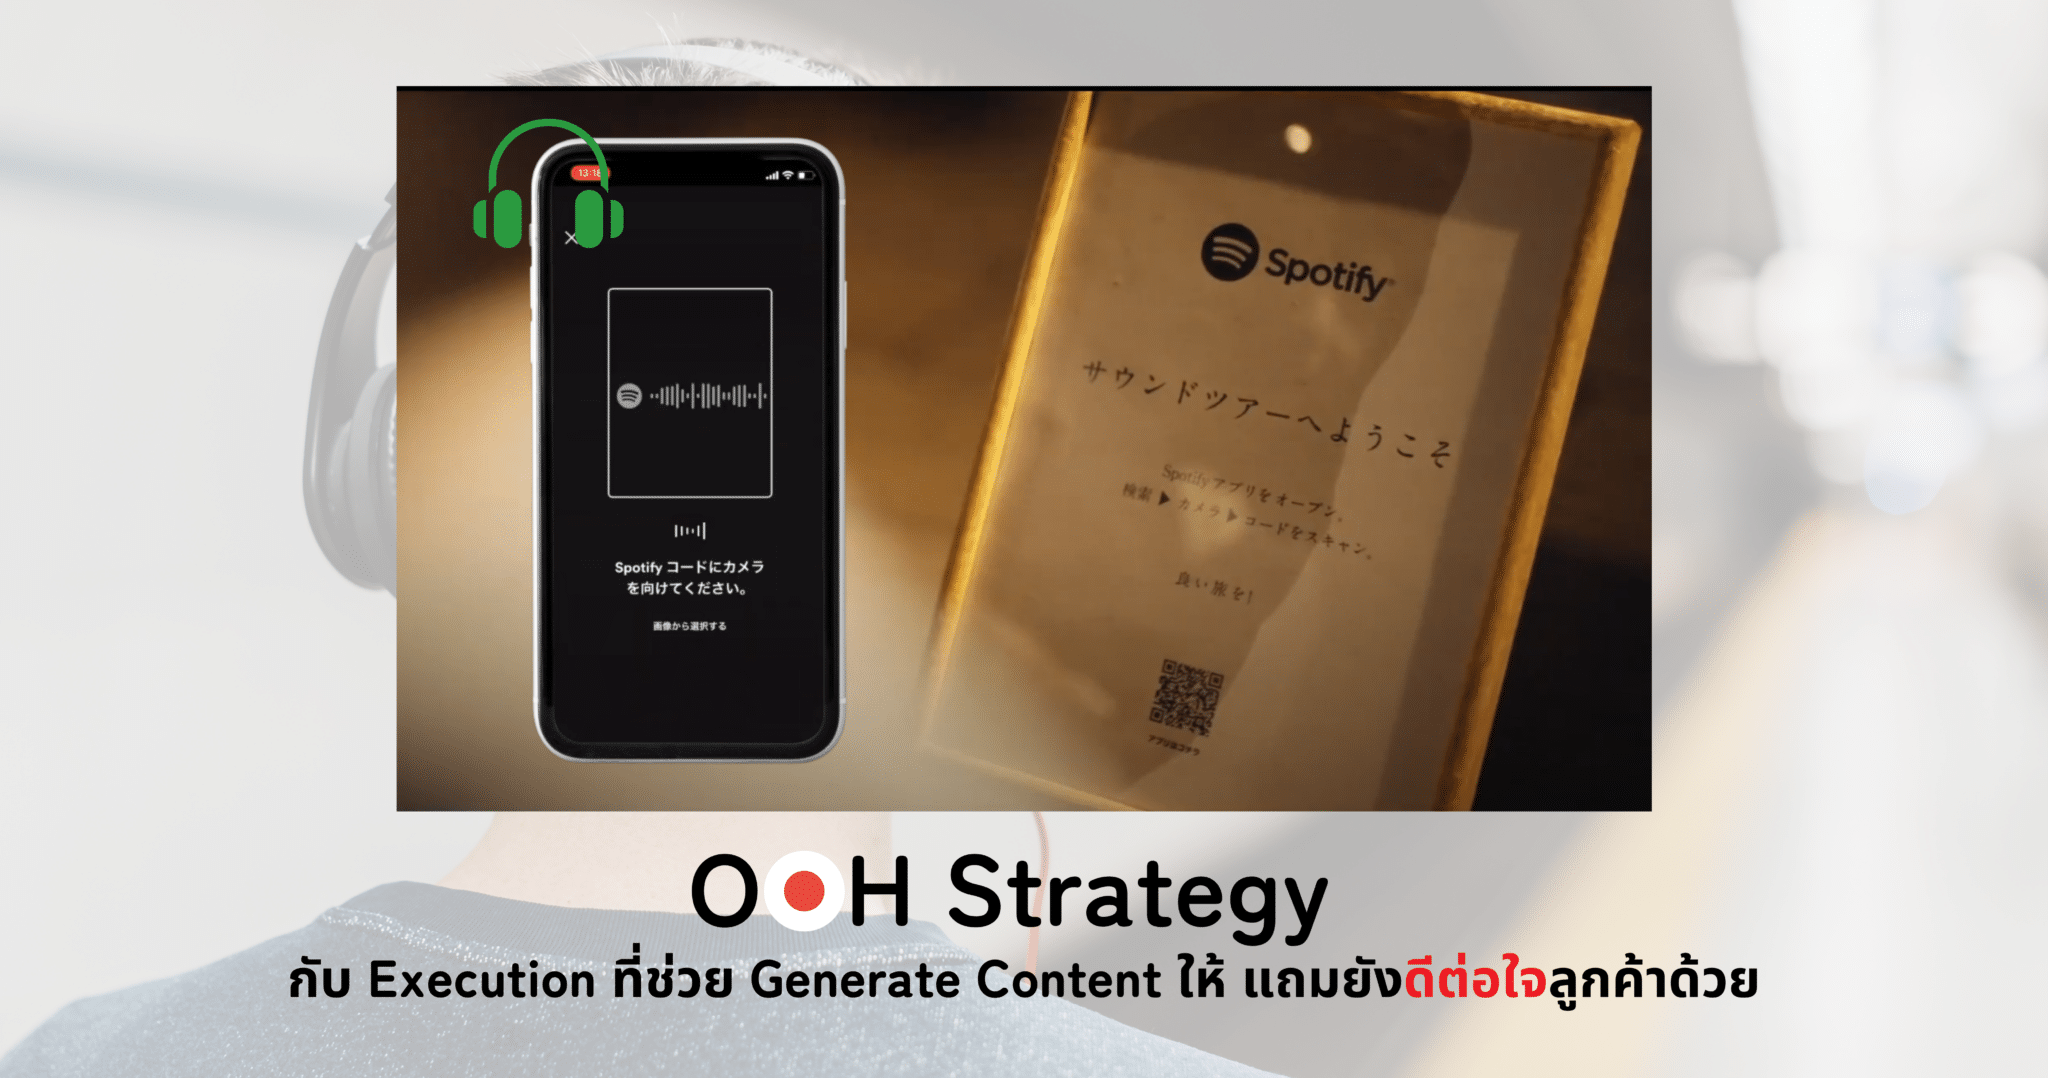 OOH Strategy กับExecutionที่ช่วยGenerate Contentให้ แถมยังดีต่อใจ